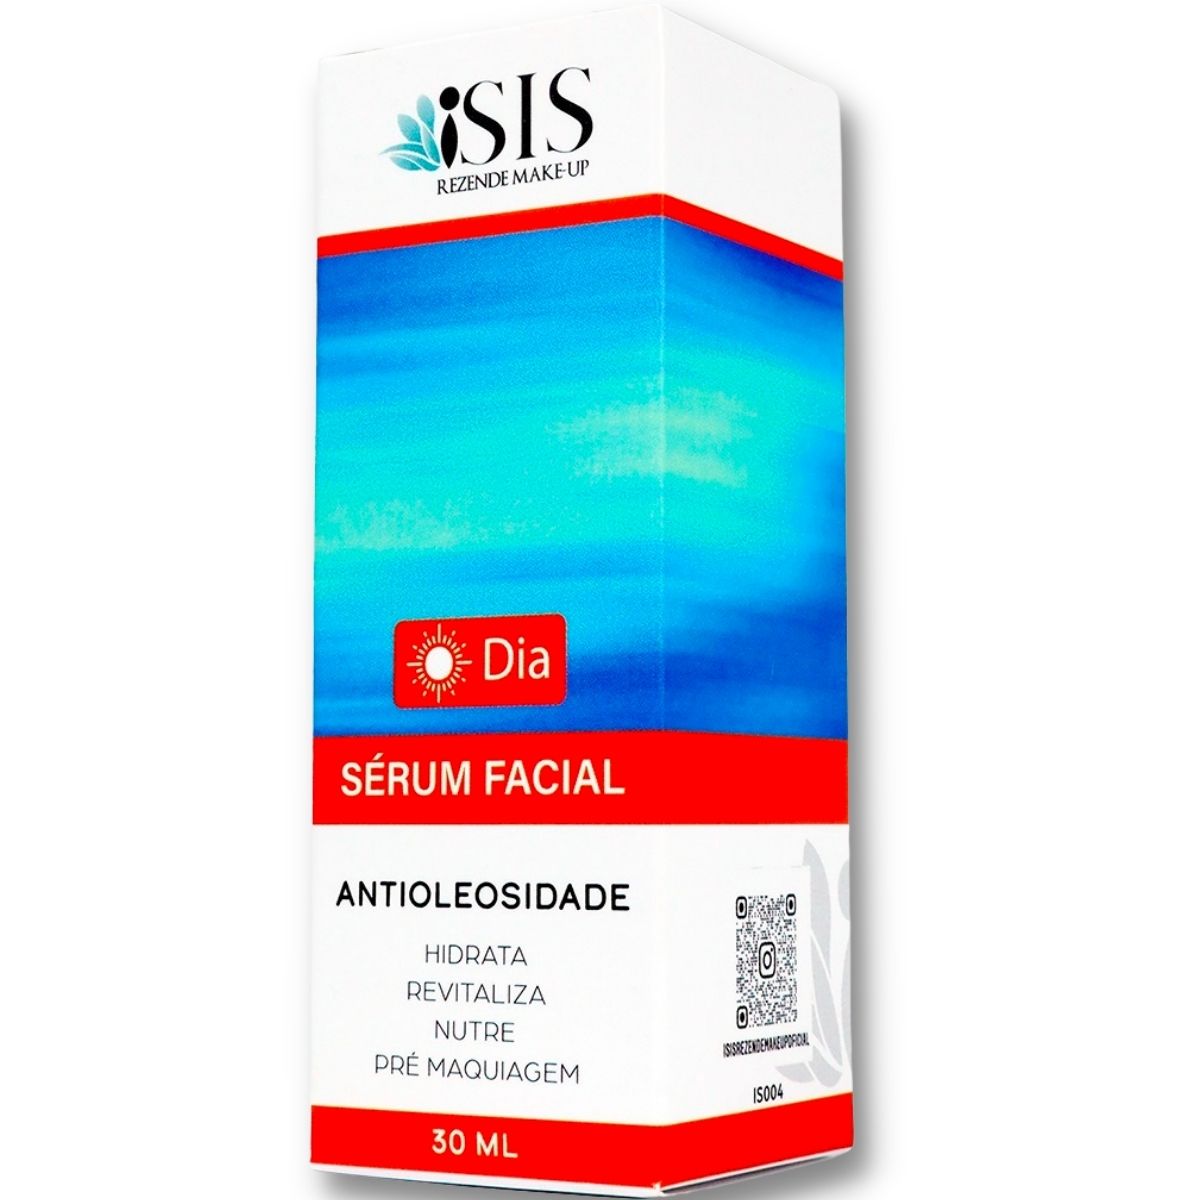 Sérum Facial Antioleosidade 30ml - Isis Rezende Makeup